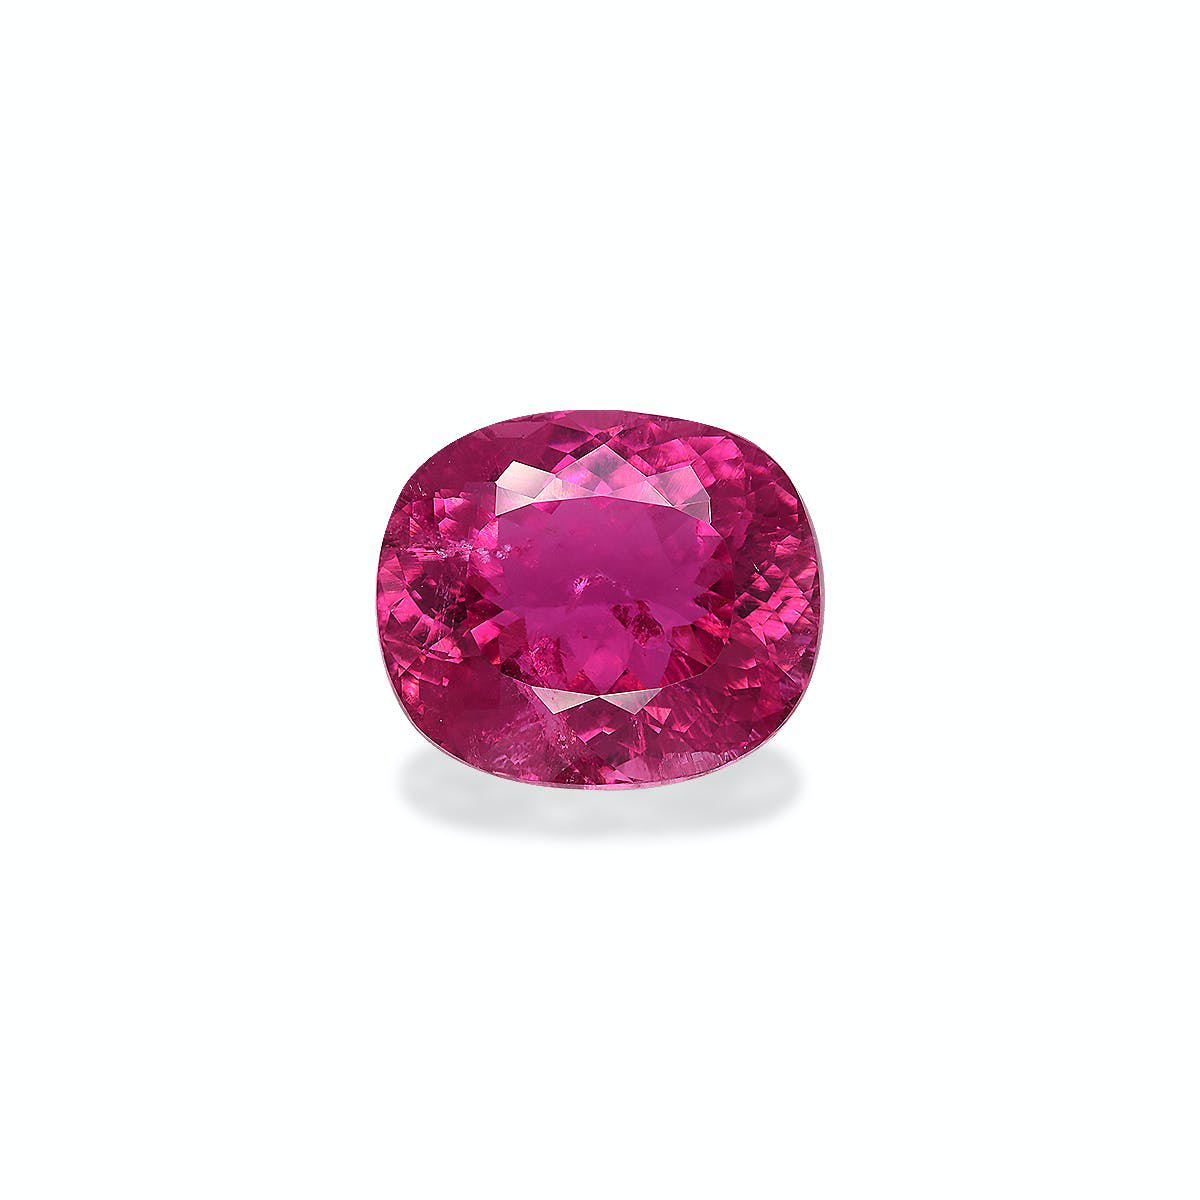 Picture of Vivid Pink Rubellite Tourmaline 22.73ct (RL1177)